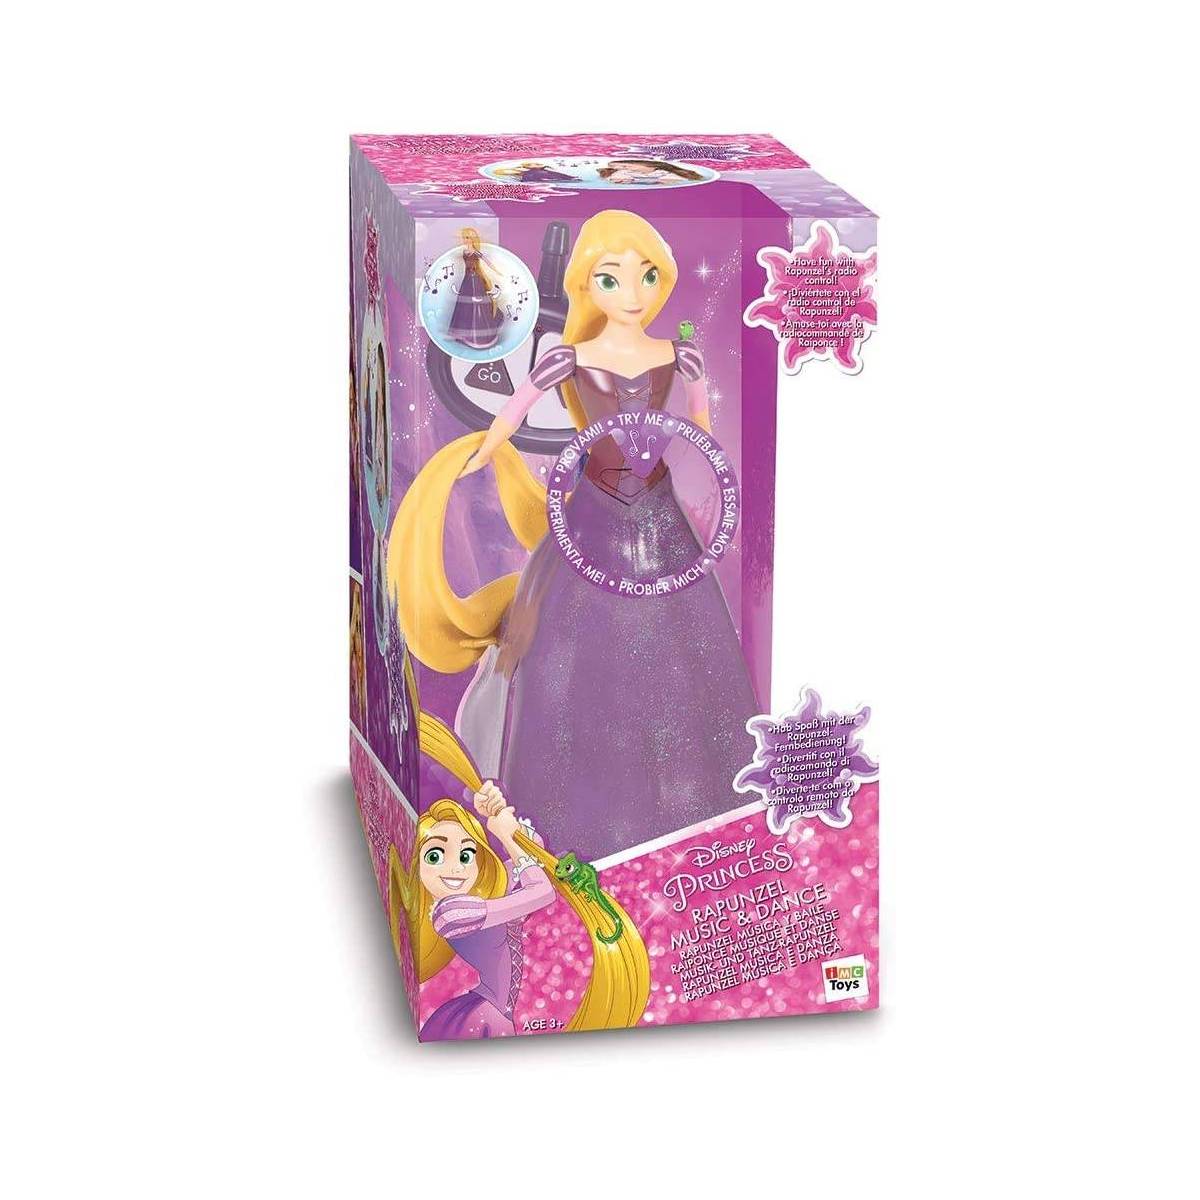 Disney Rapunzel Radio Controlled Figure IMC TOYS